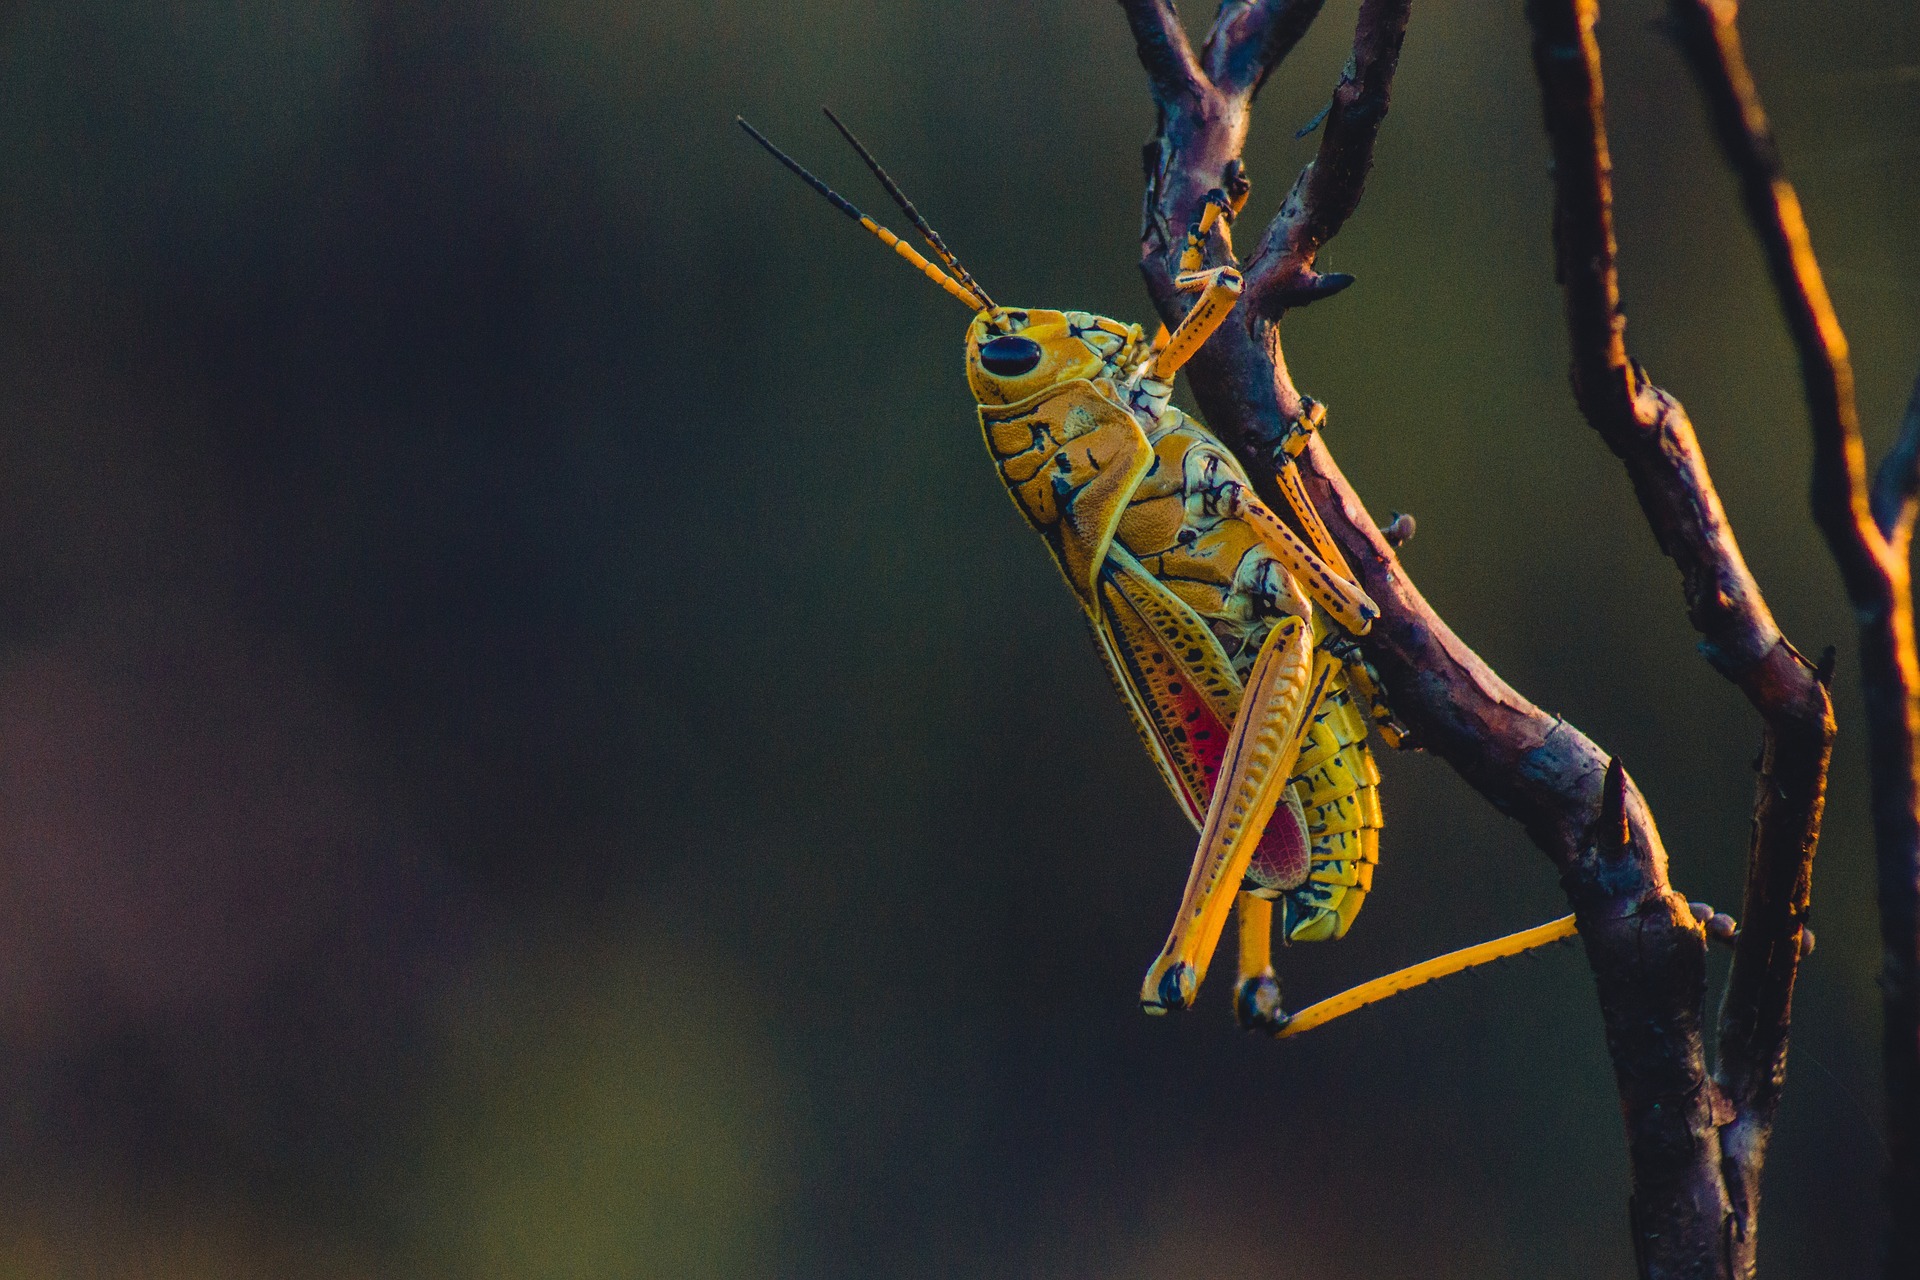 Ambient Sound – Crickets